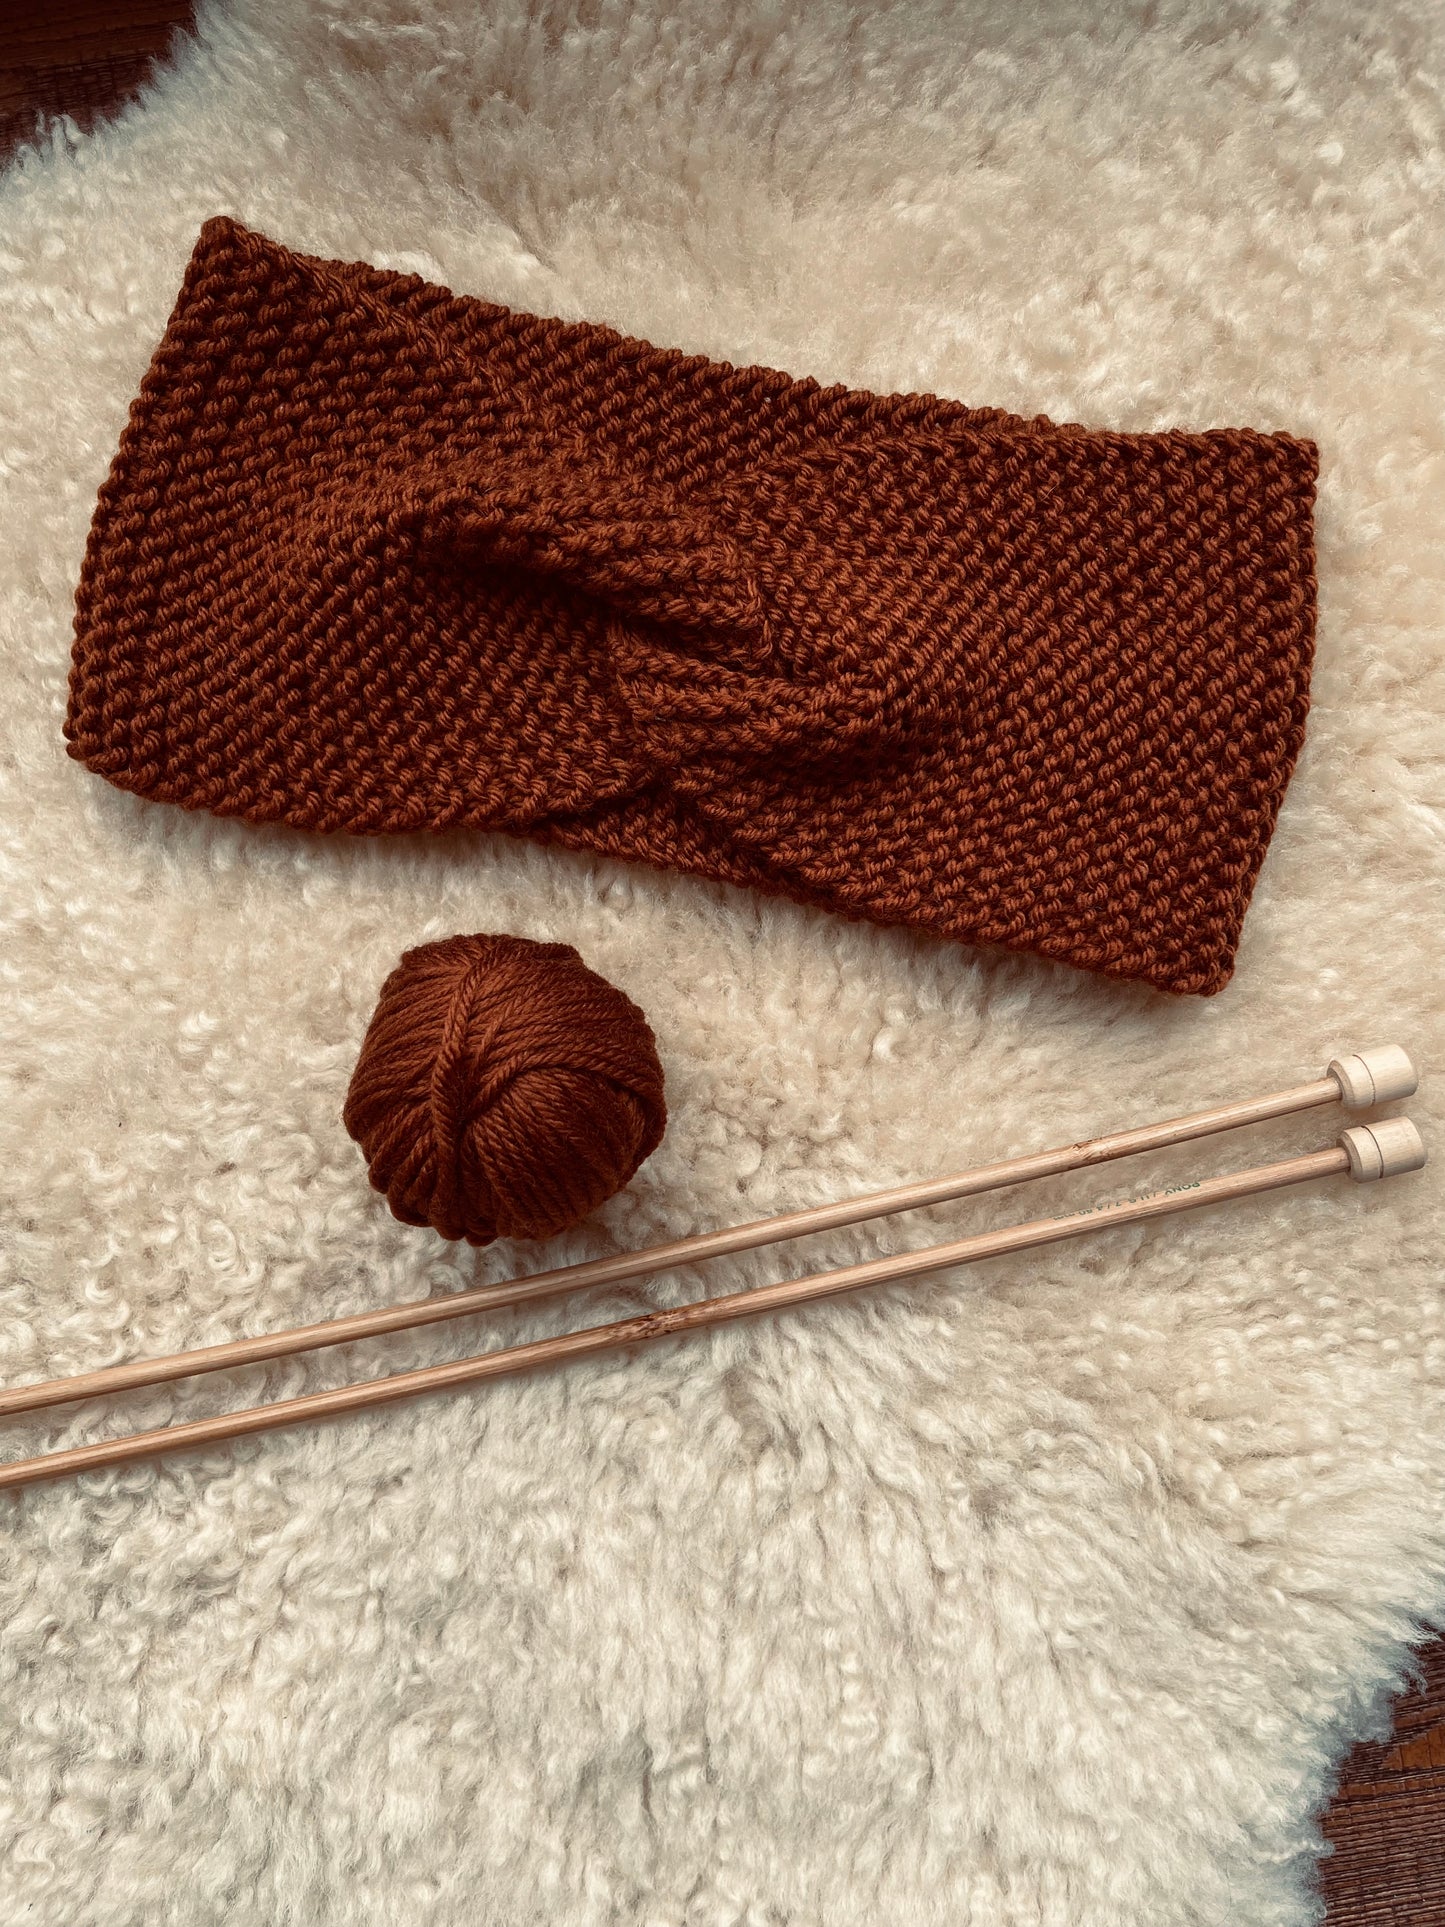 Learn to Knit - Beginner Workshop